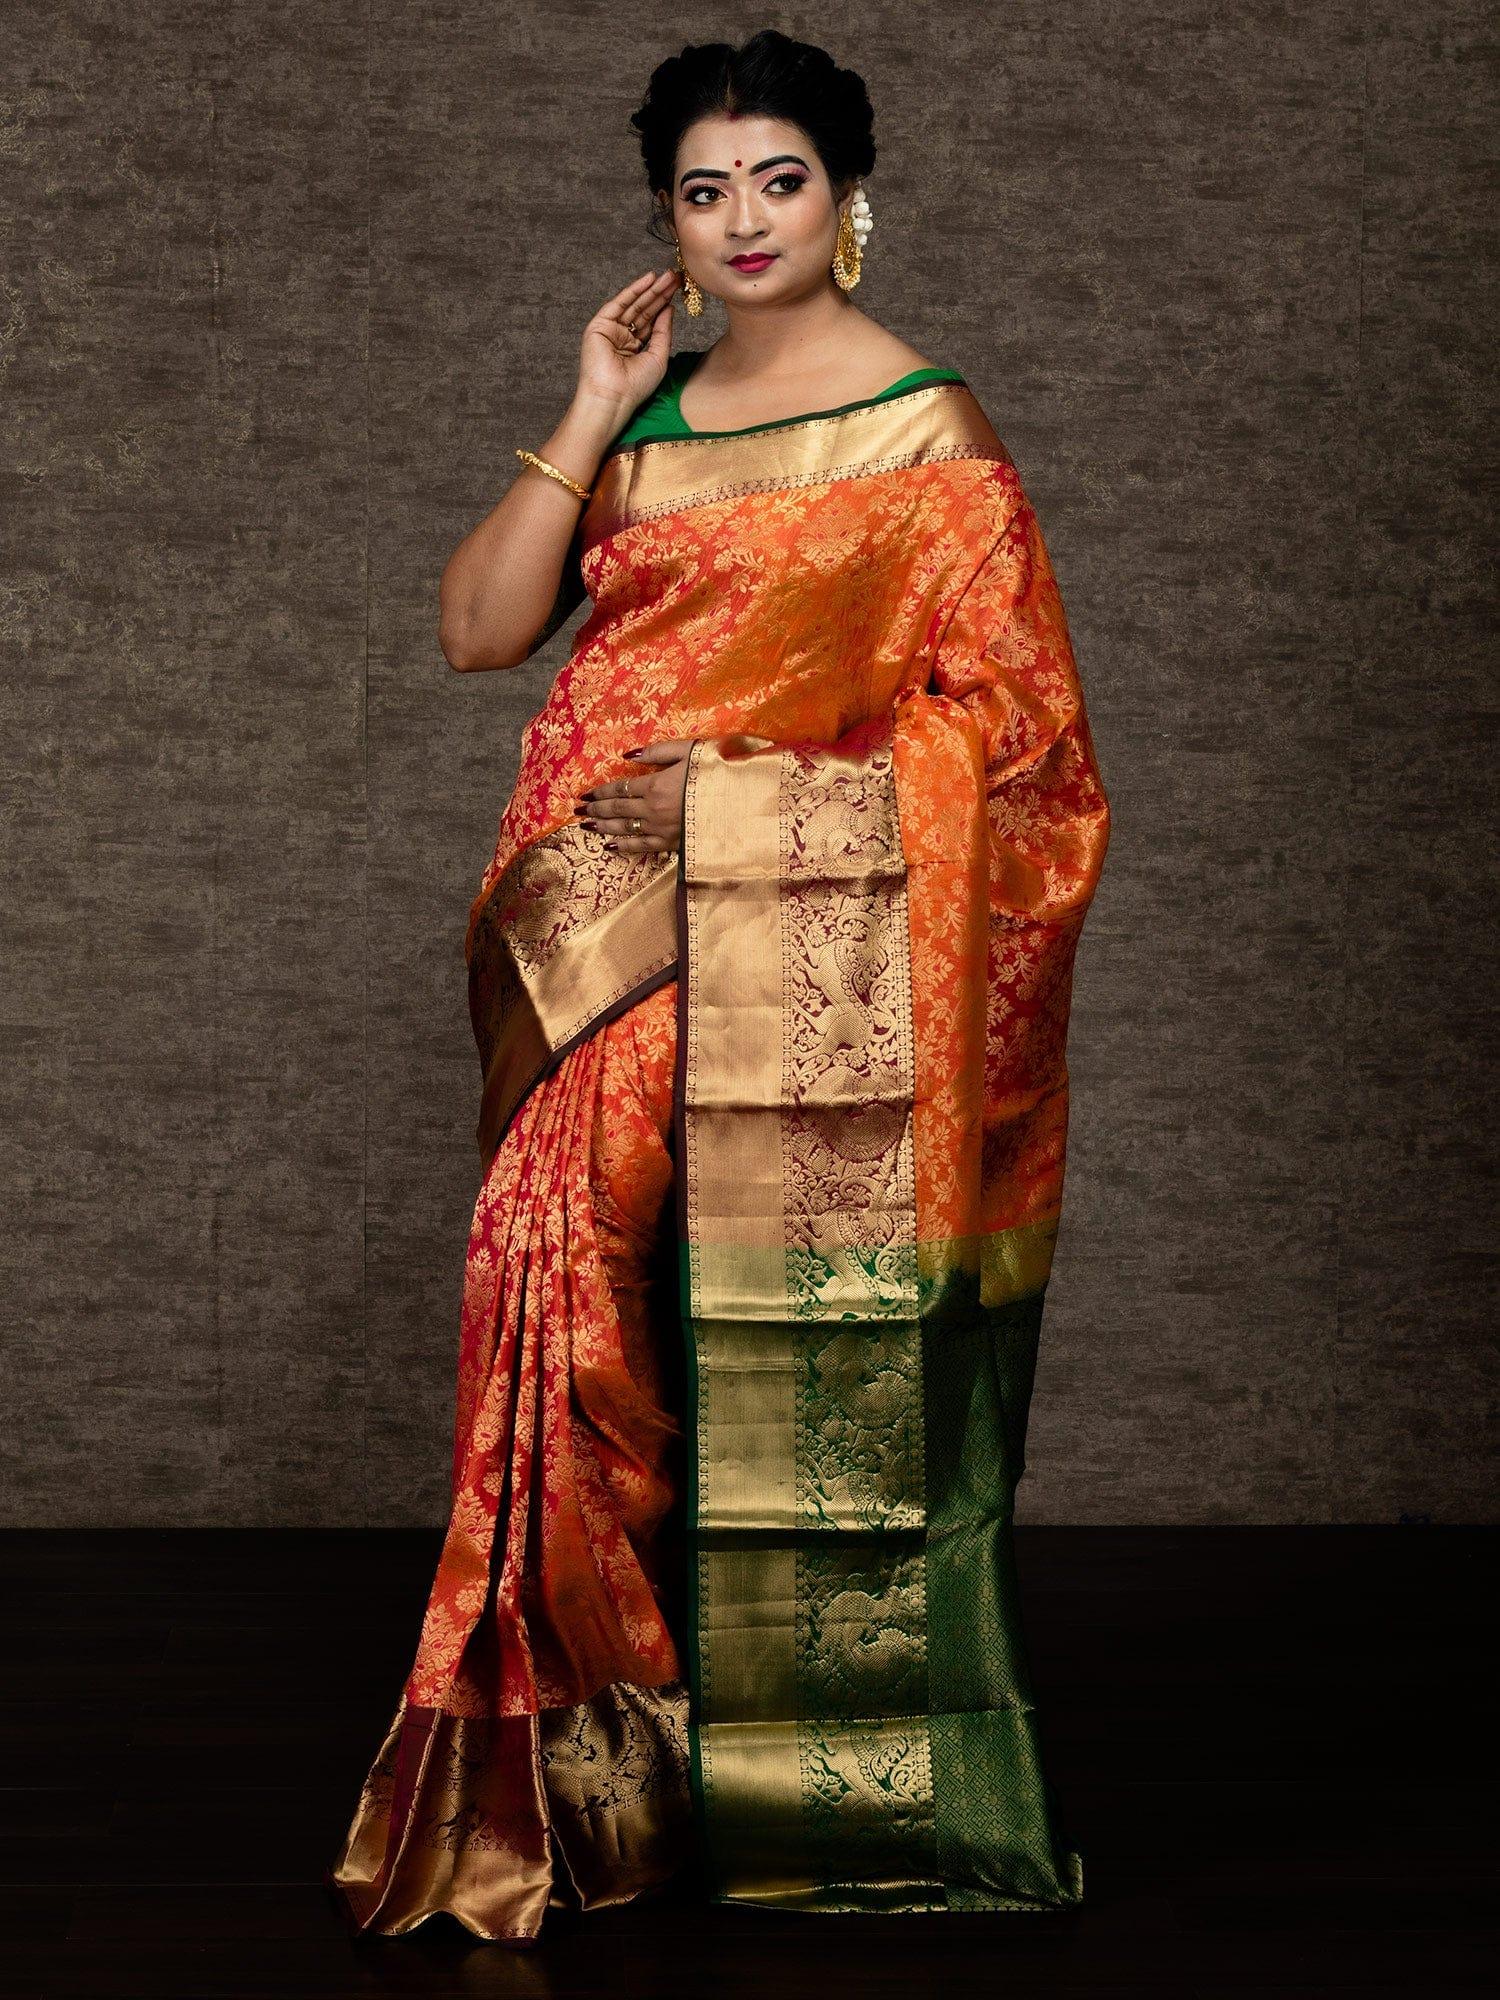 Silk Saree with blouse in Orange colour 14001